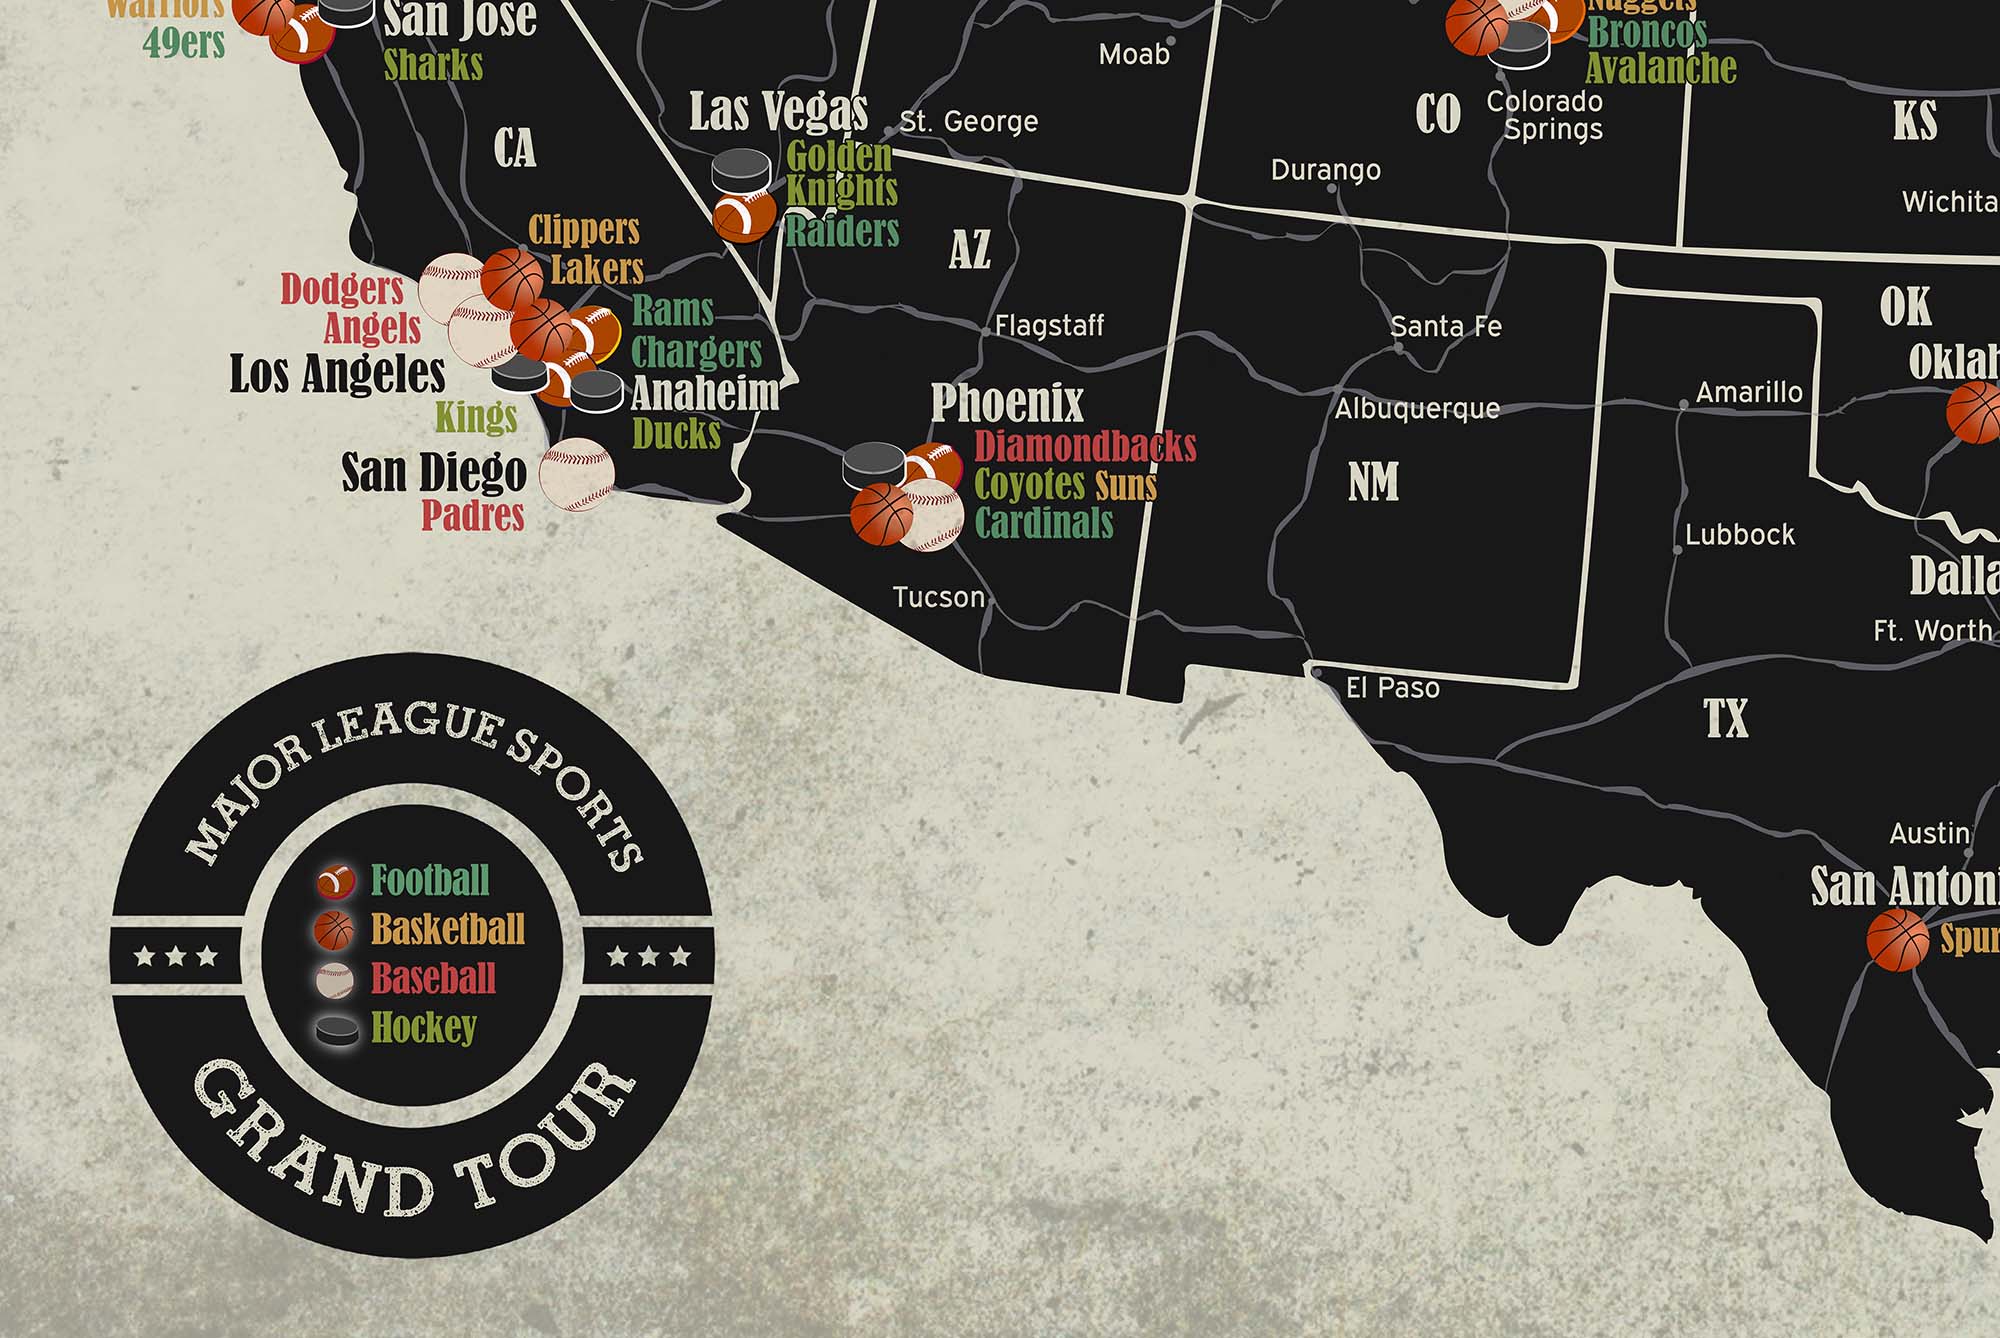 Grand Tour 4 Stadium Map - MLB, NFL, NBA, NHL